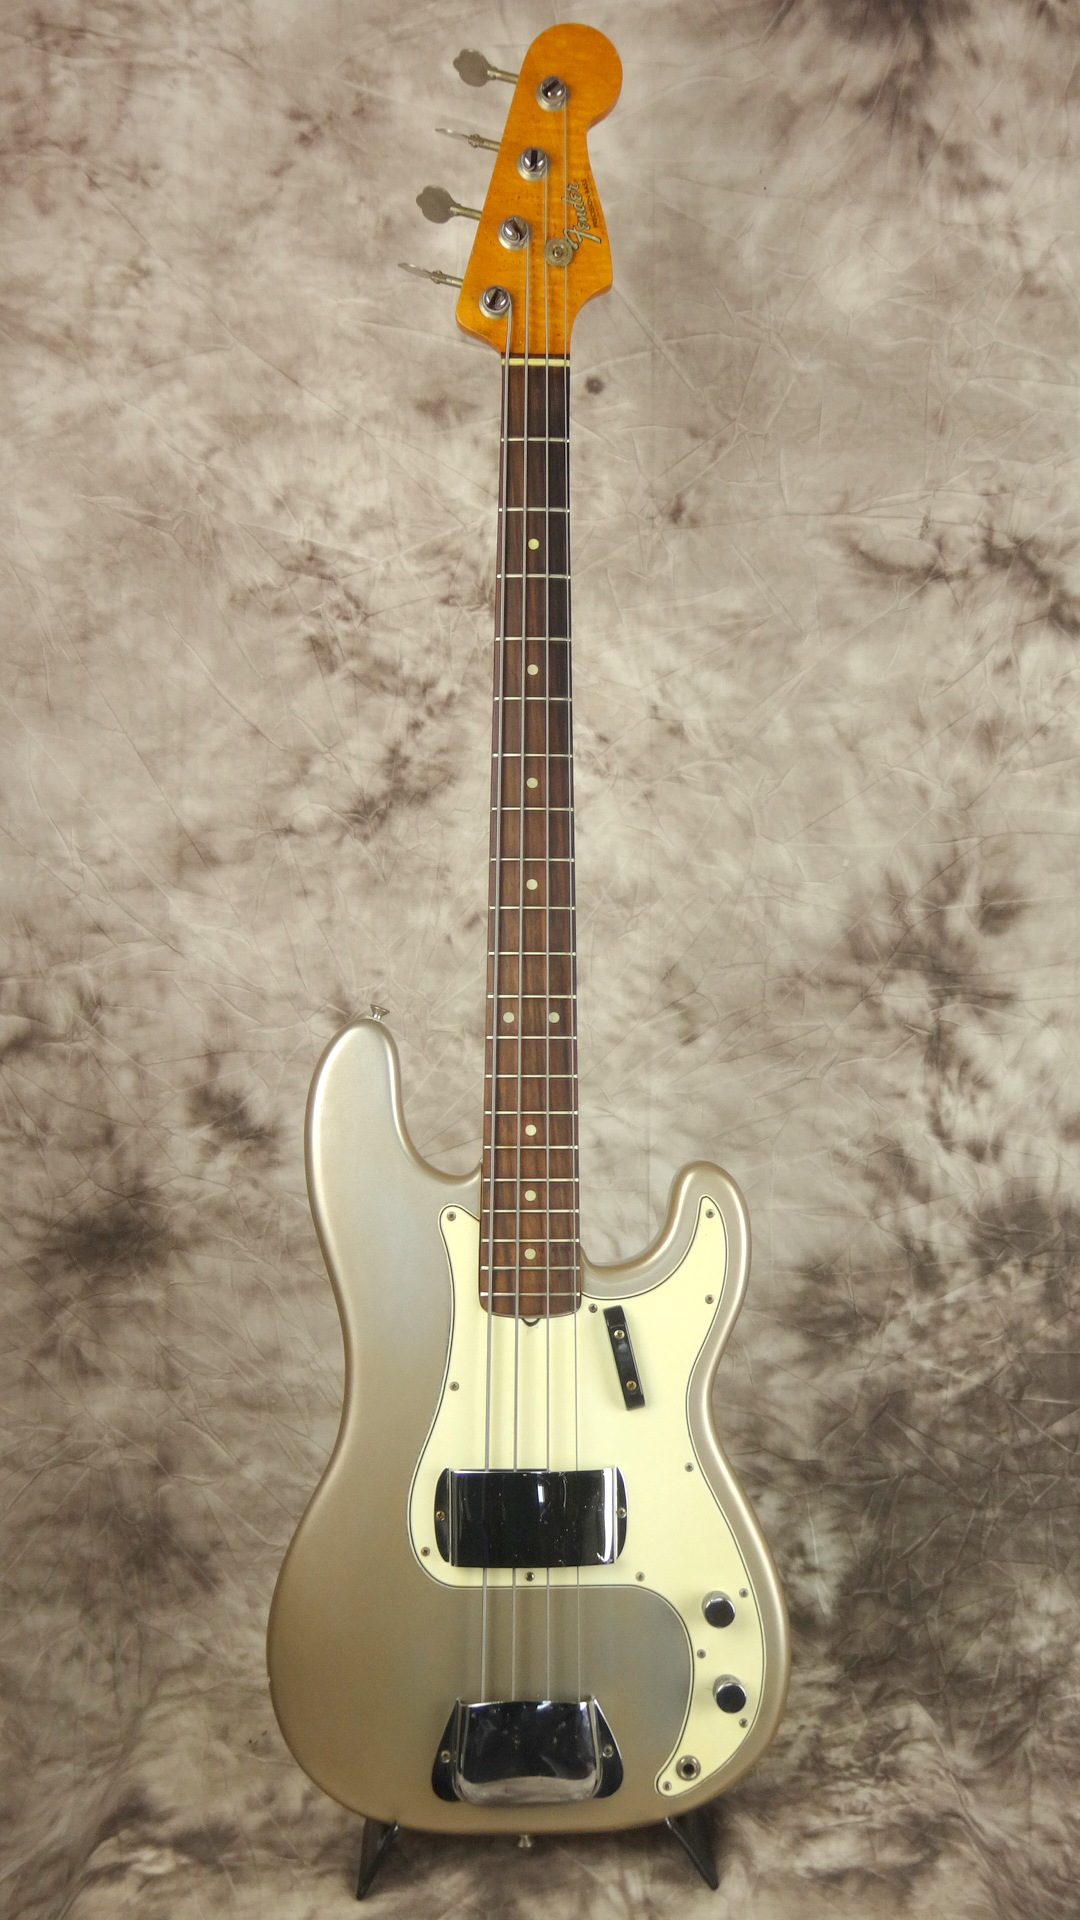 Fedner_precision-Bass-1968-refinished-shoreline-gold-001.JPG